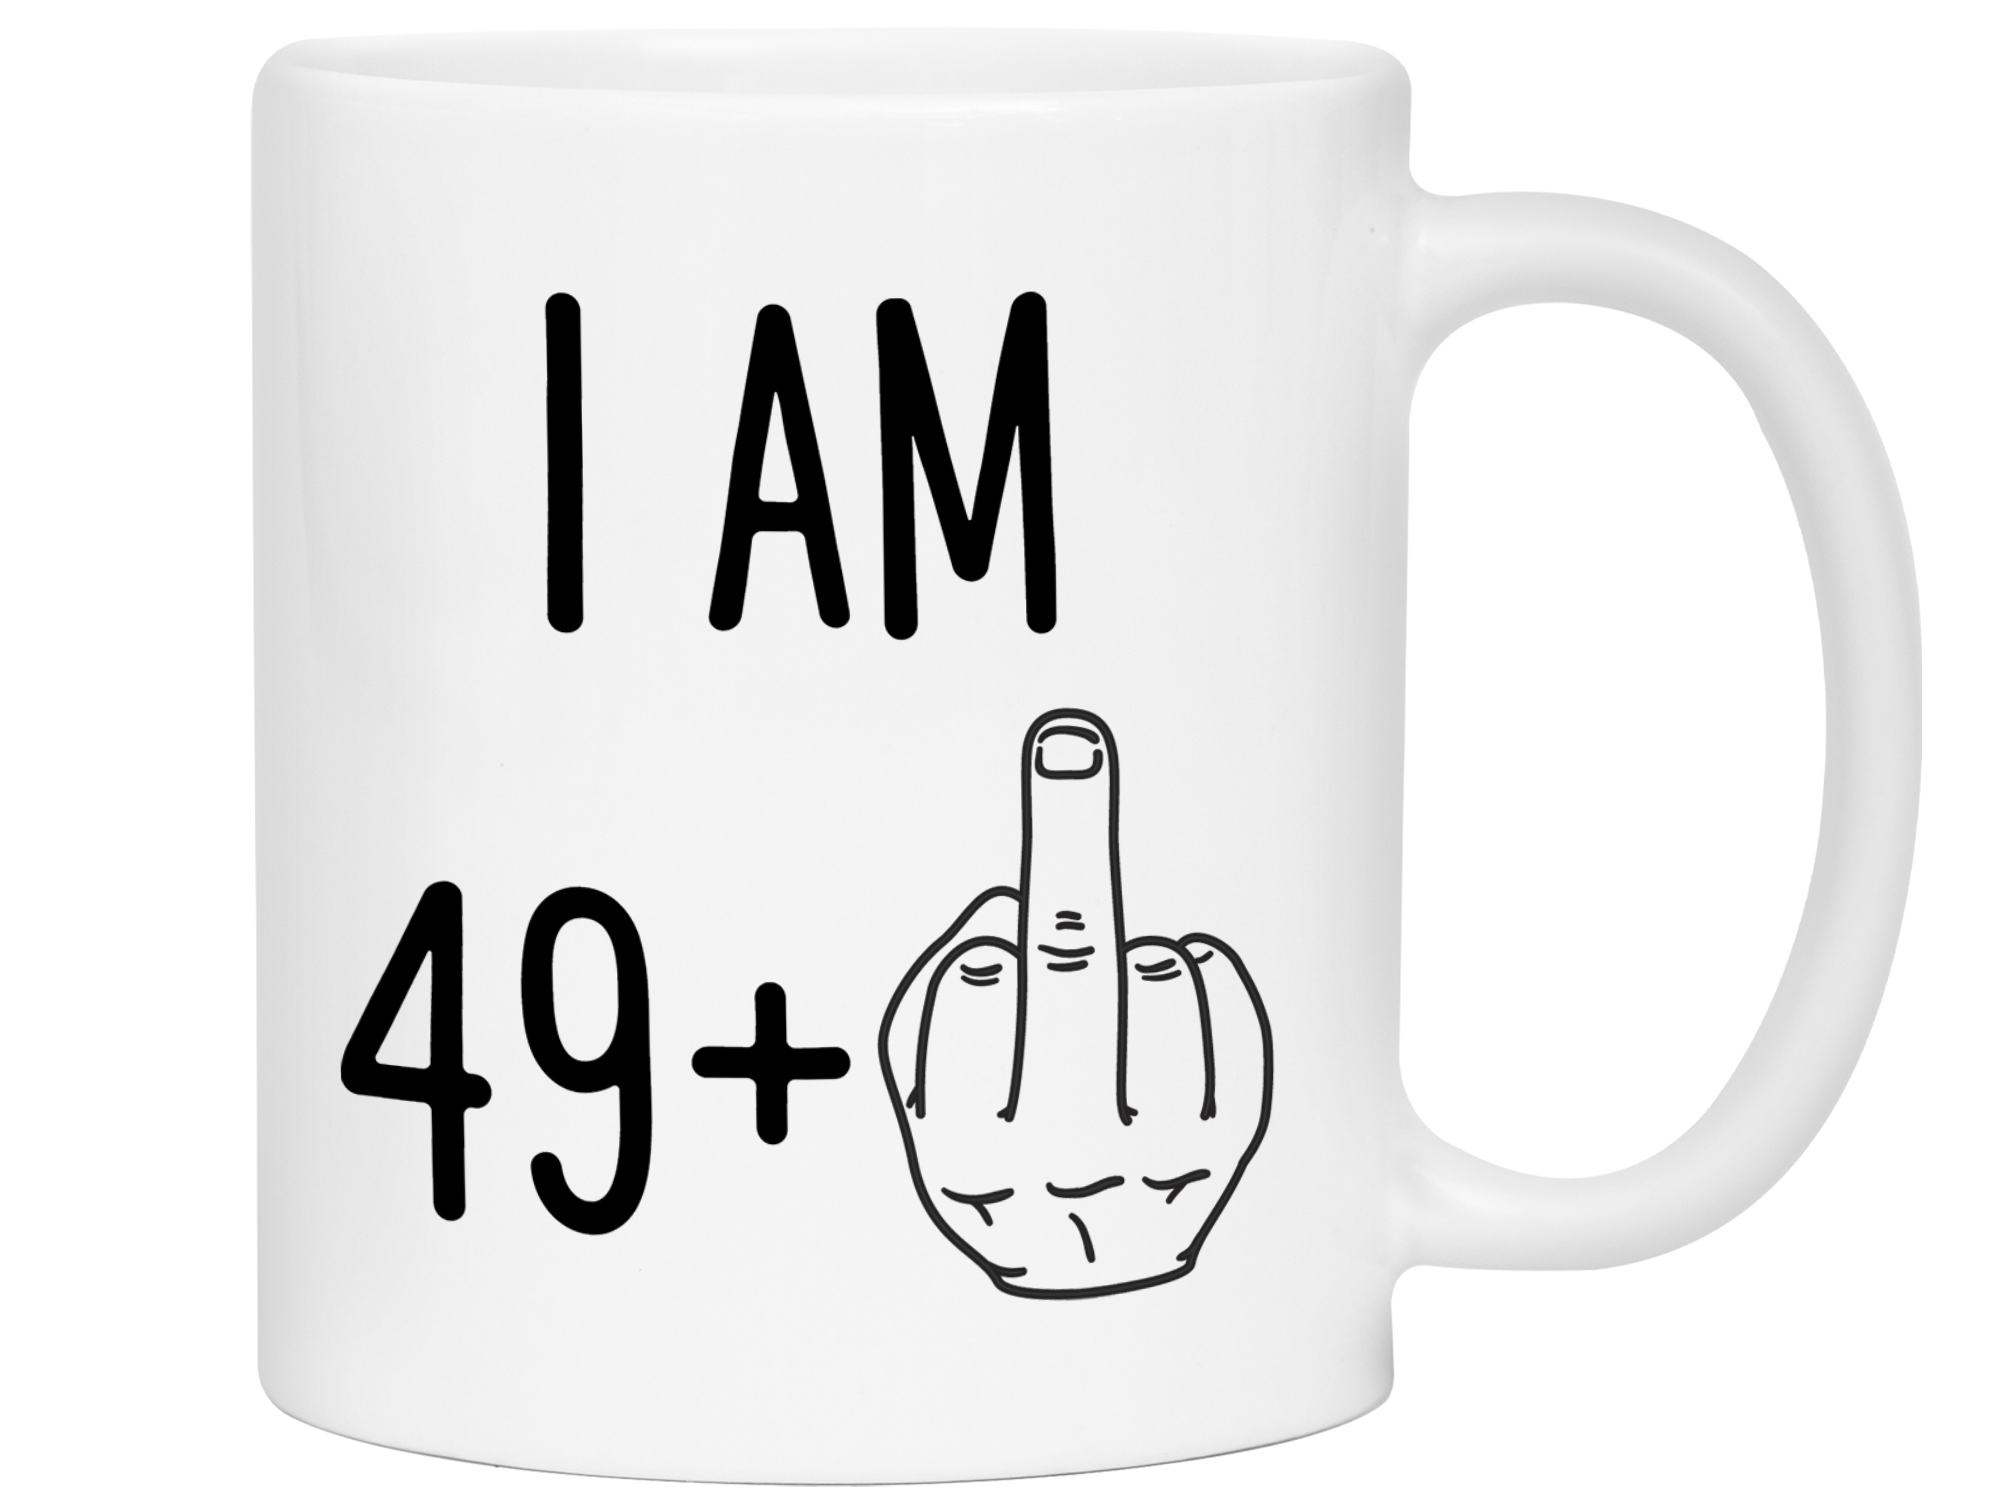 50th Birthday Gifts - I Am 49 + Middle Finger Funny Coffee Mug - Gag Gift Idea